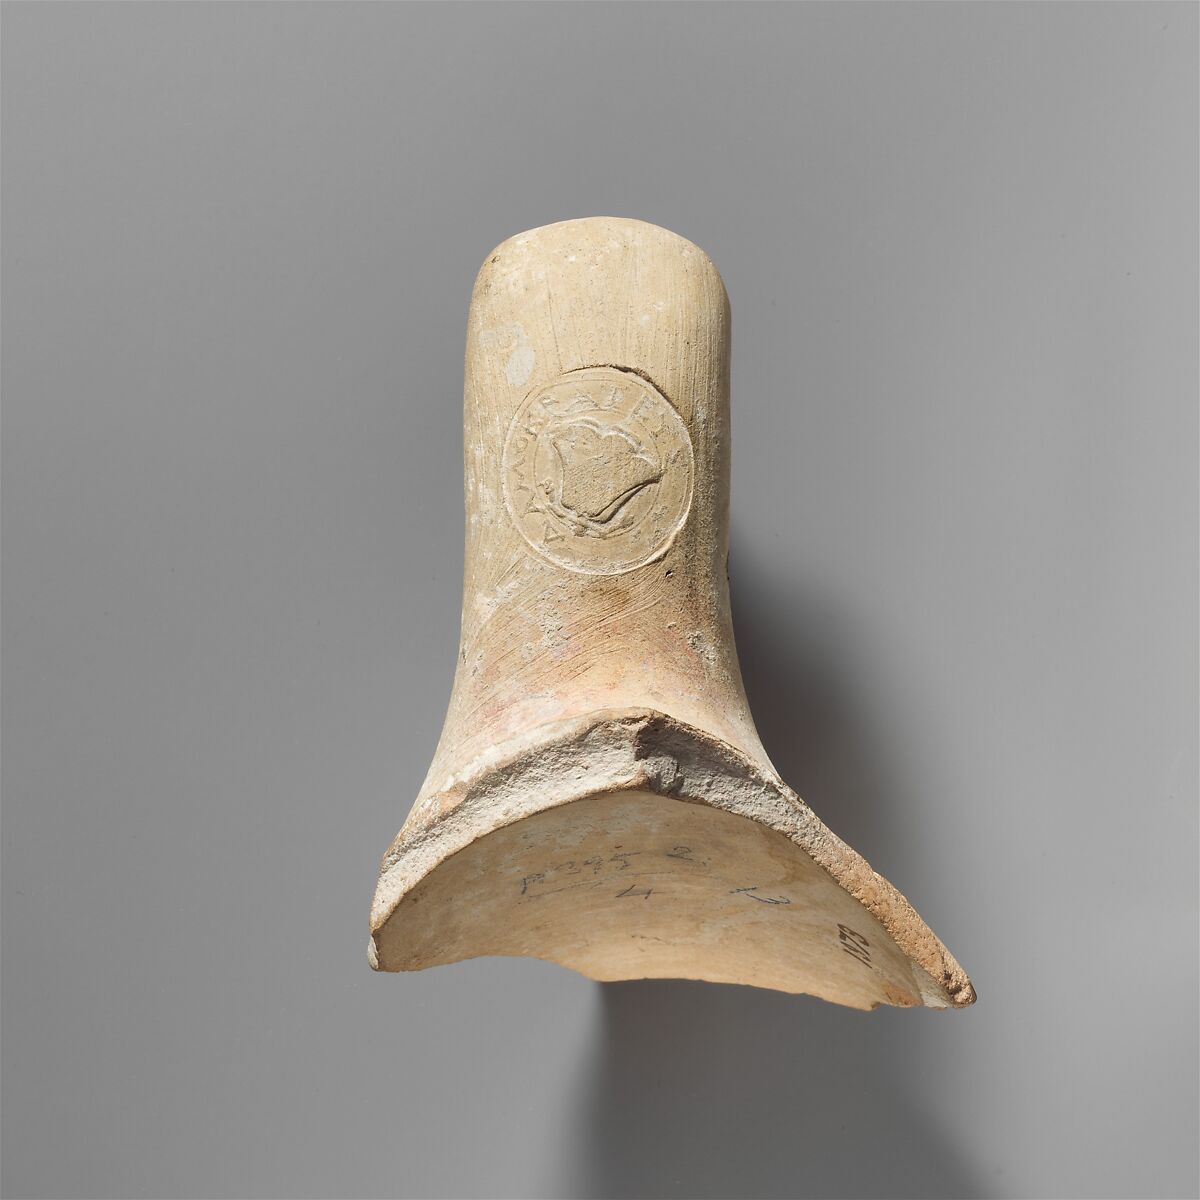 Terracotta amphora handle with stamp, Terracotta, Greek, Rhodian 